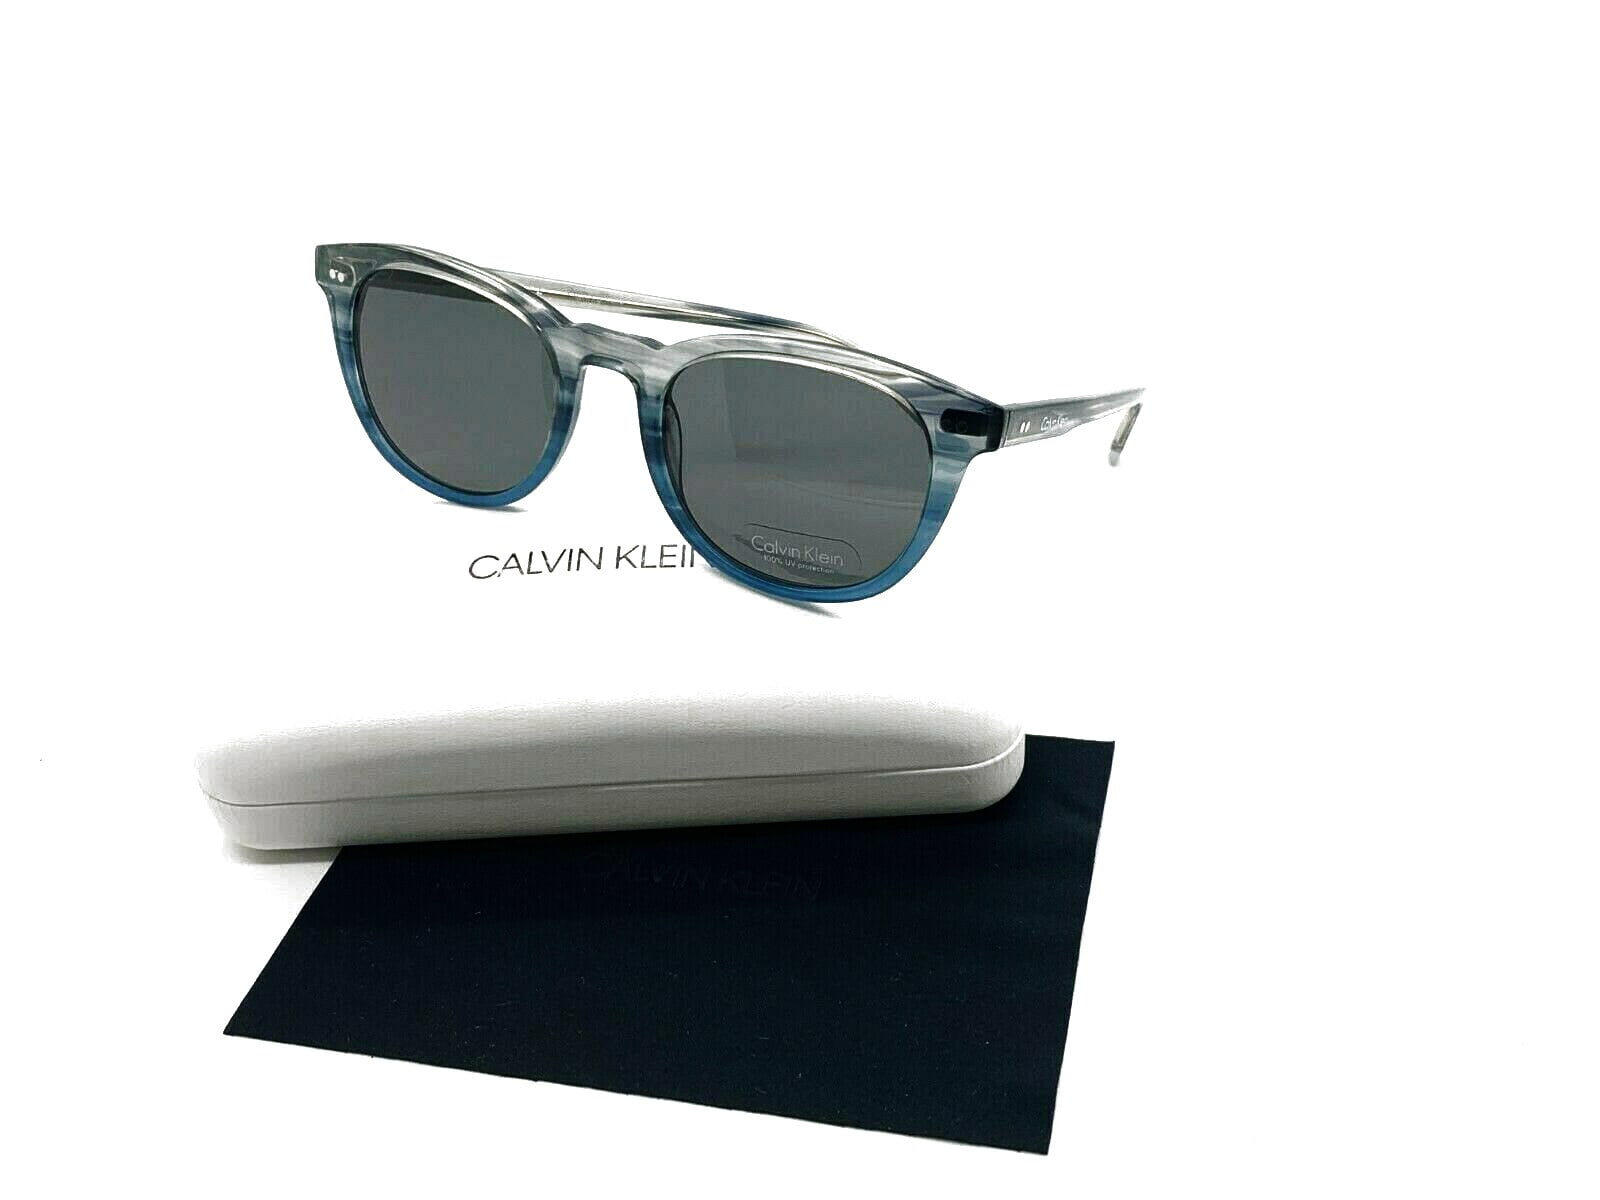 Sunglasses CK 4358 S 064 STRIPED GREY/BLUE